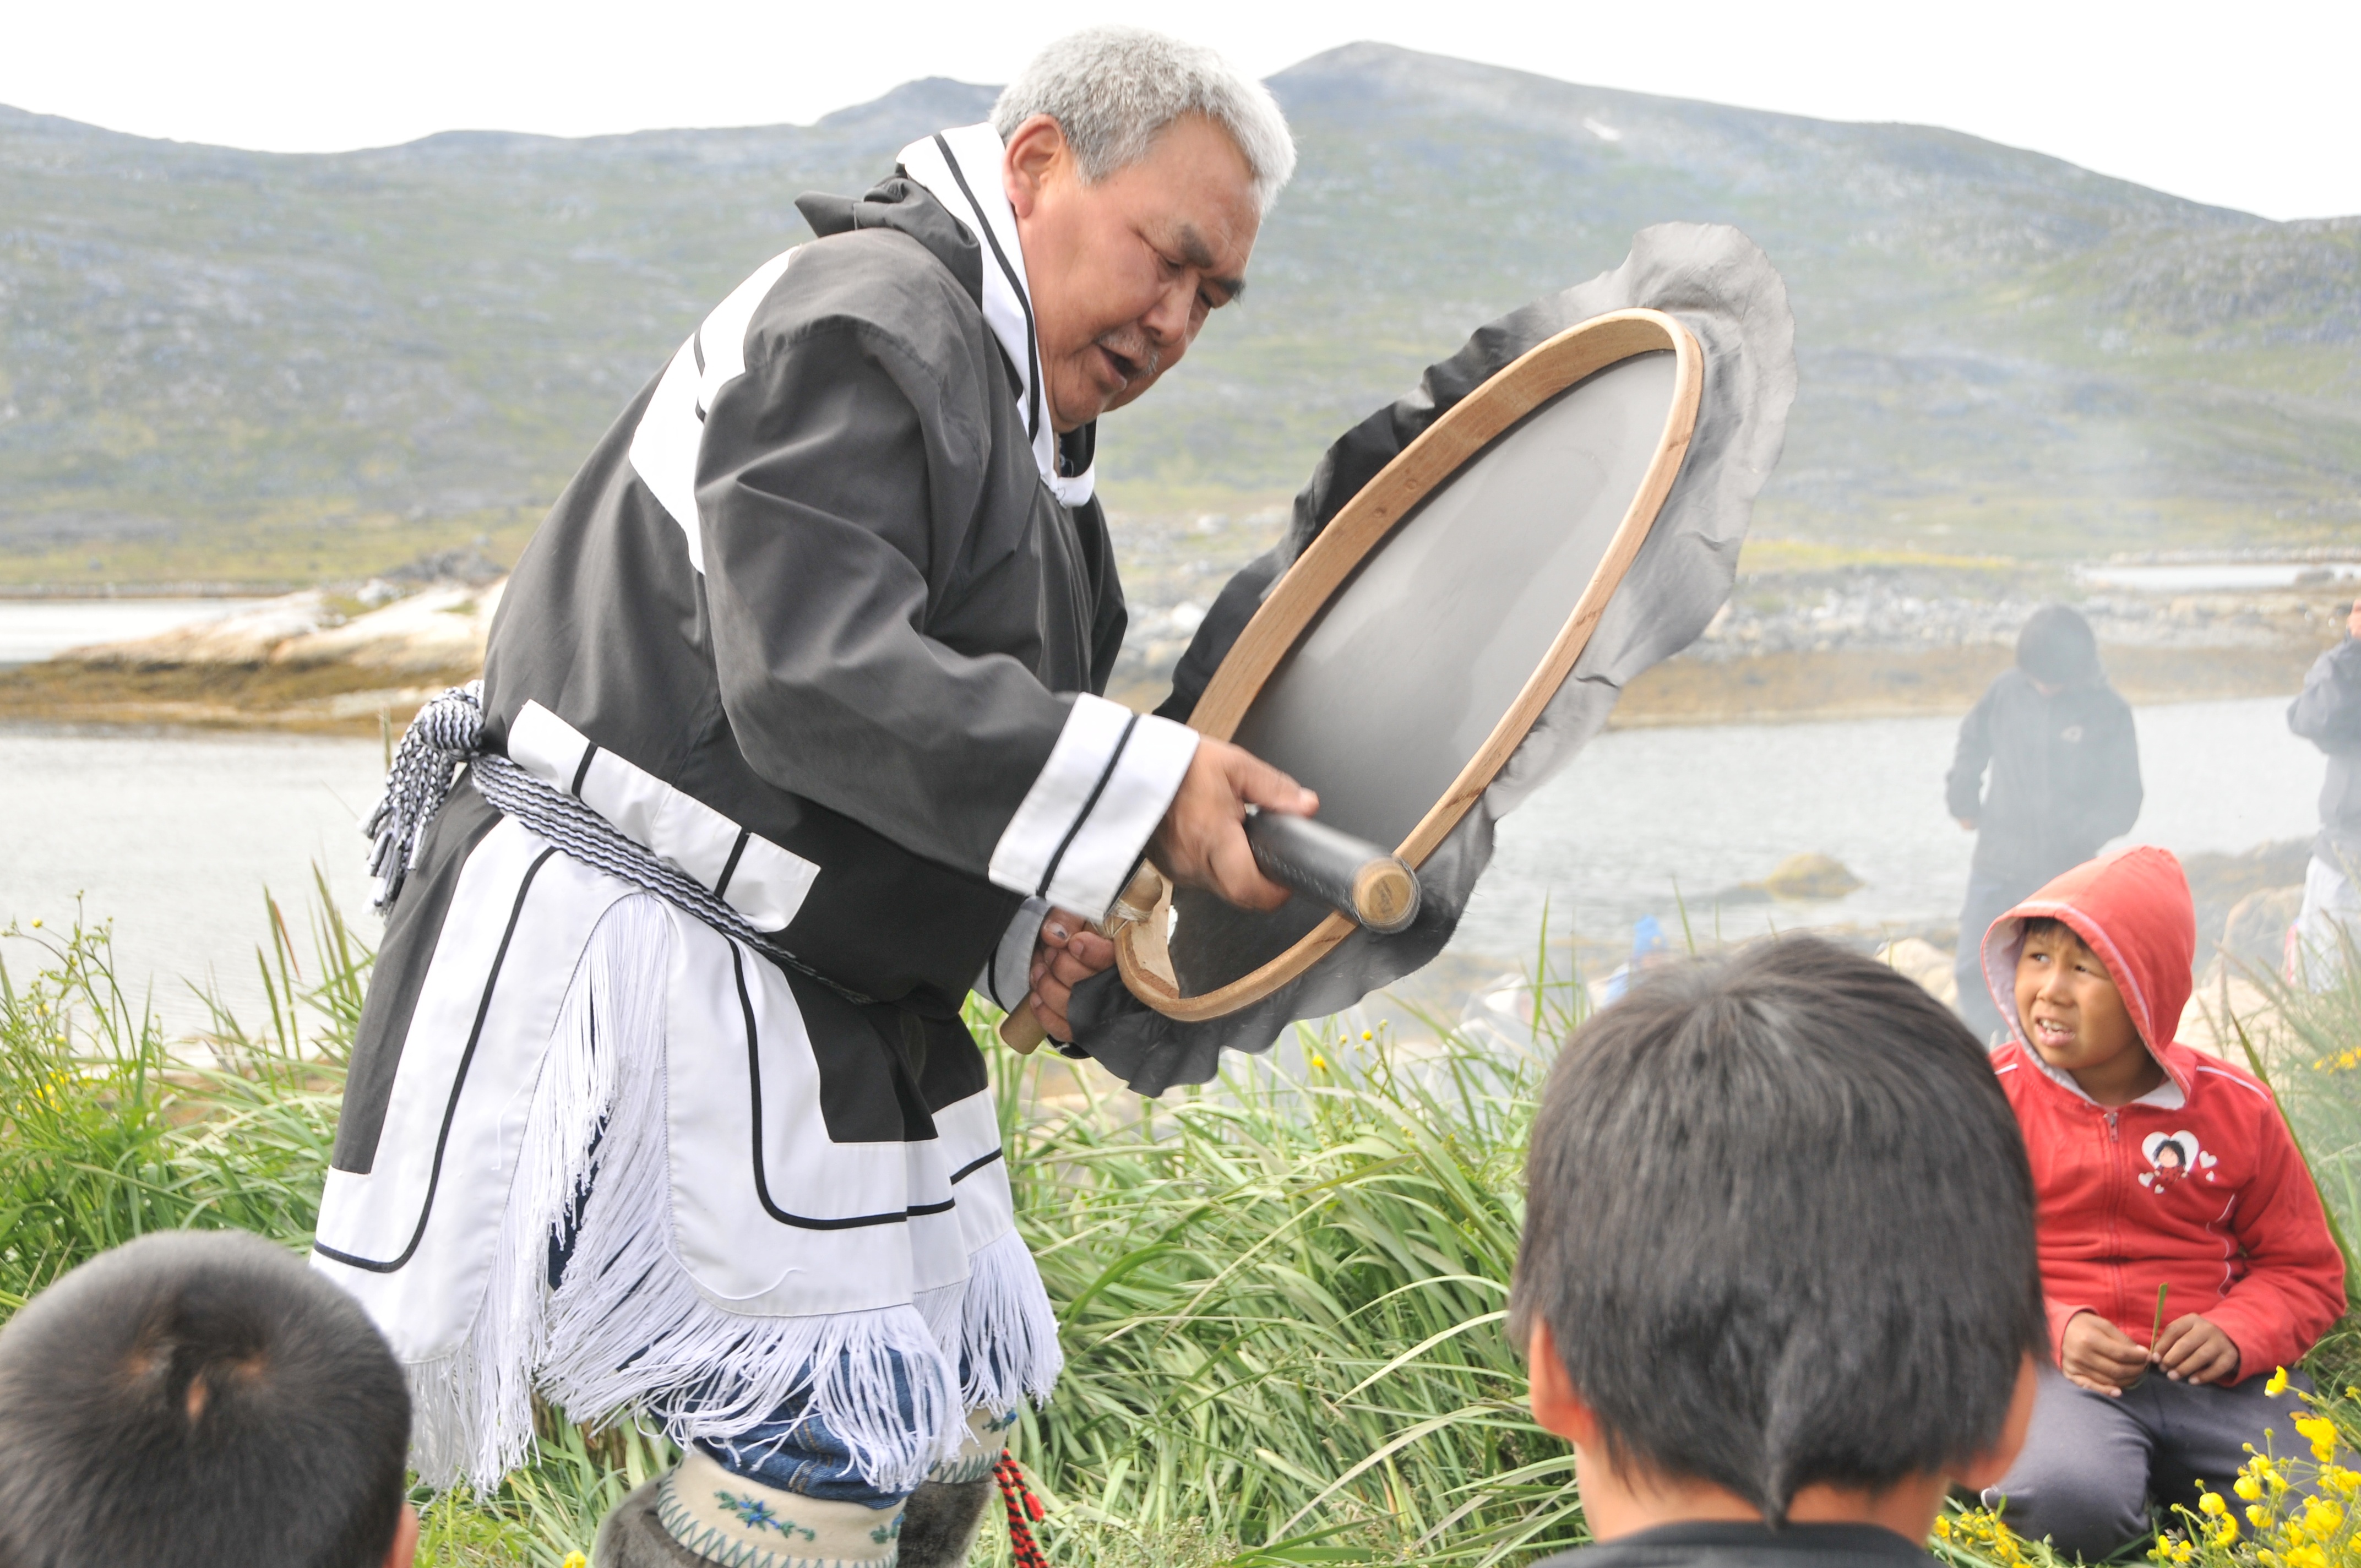 Inuit Elder David Serkoak leads a drum dance in the Arctic.